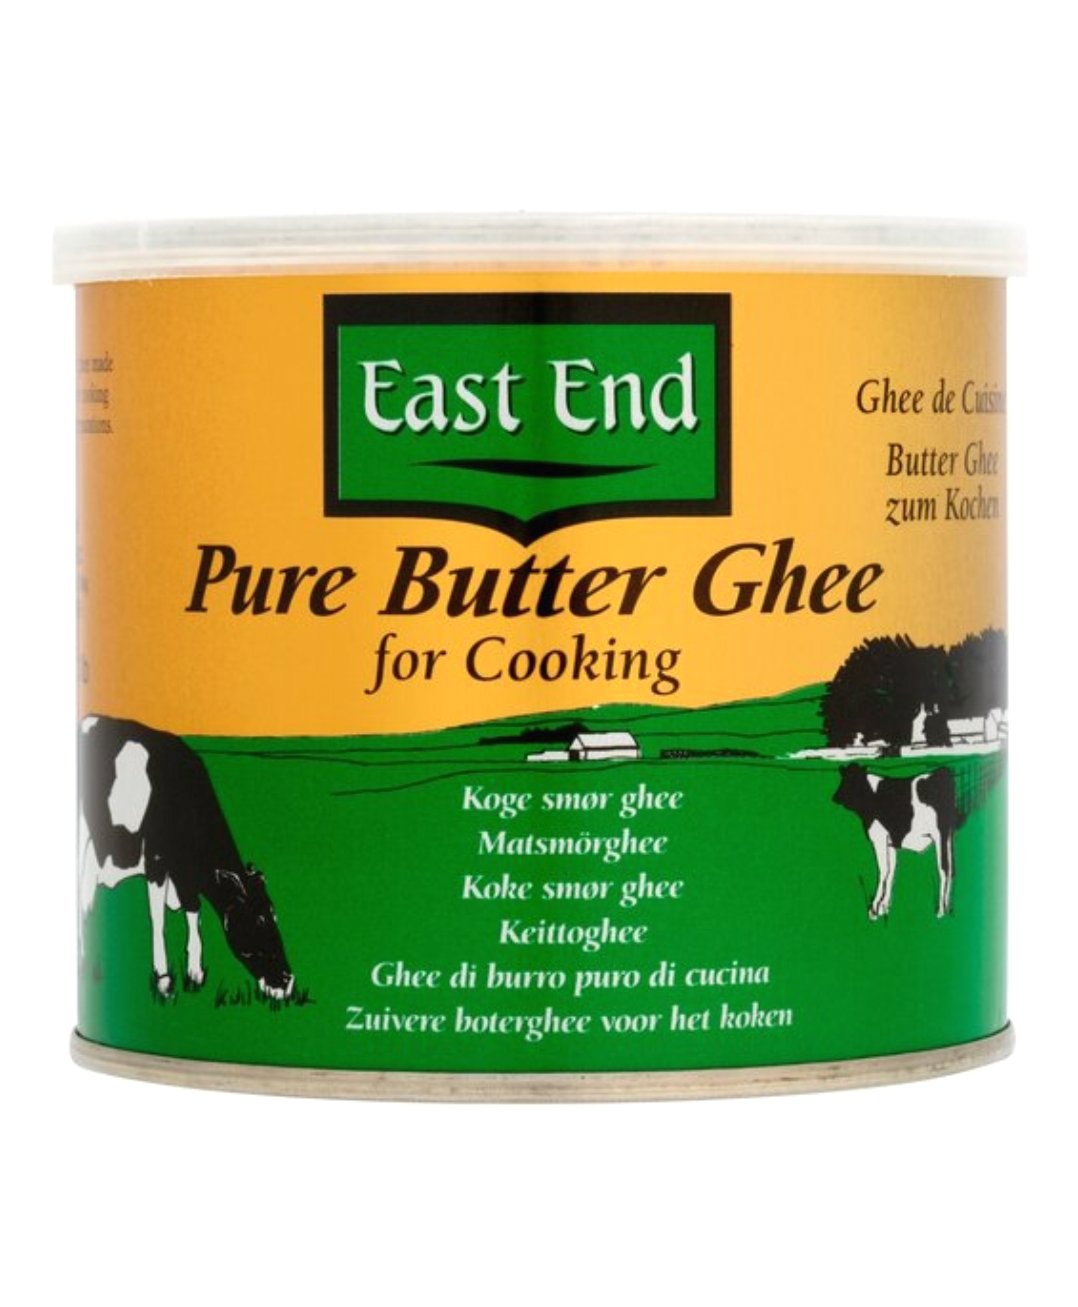 East End Butter Ghee 500g